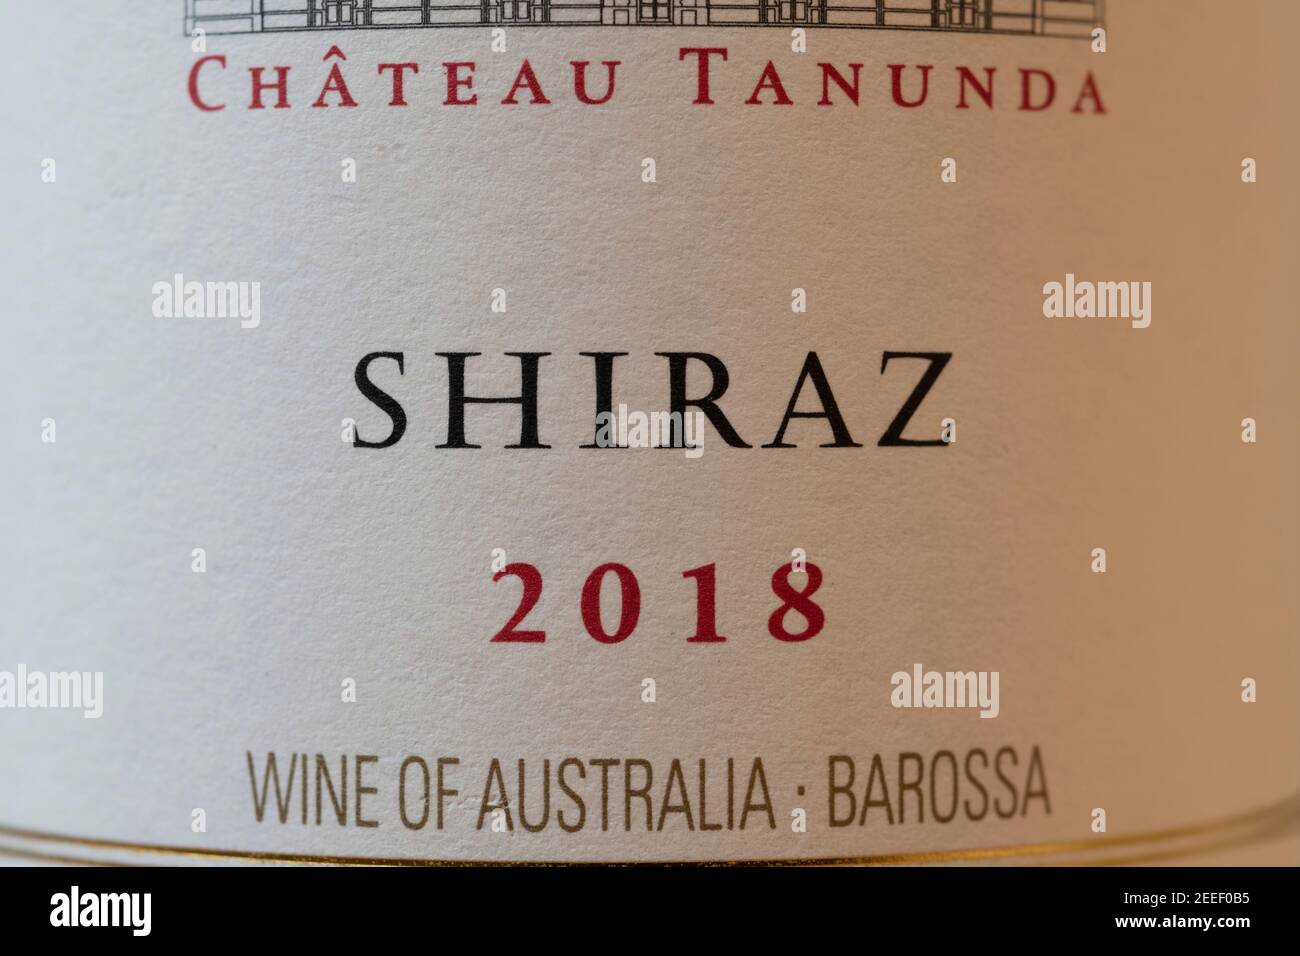 Chateau Tanunda Shiraz 2018 bottiglia australiana di vino etichetta closeup Foto Stock